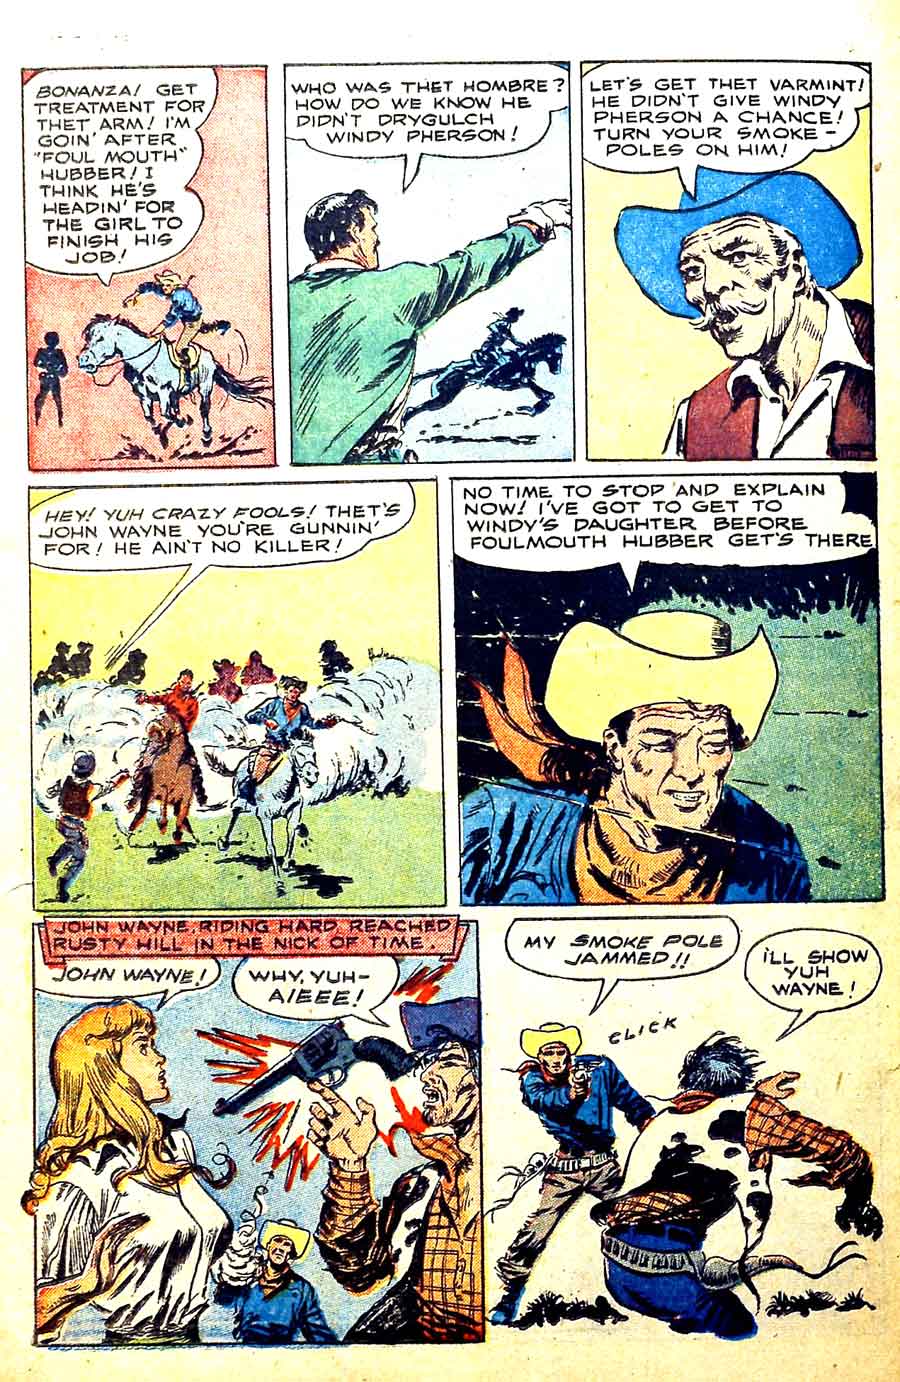 John Wayne Adventure Comics #4 golden age 1950s western comic book page art by Al Williamson / Frank Frazetta